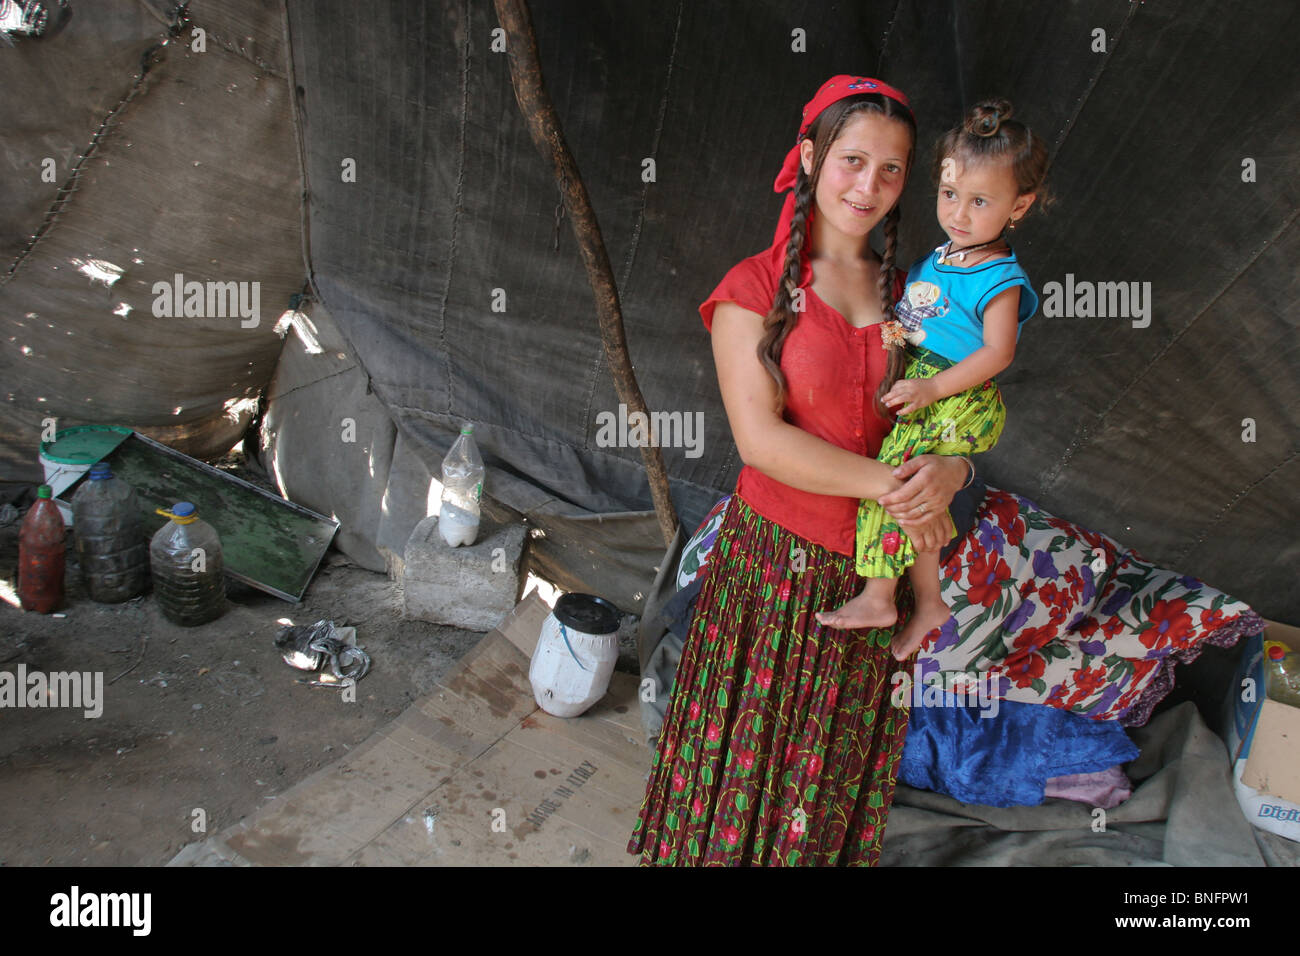 Rumänische zigeuner -Fotos und -Bildmaterial in hoher Auflösung – Alamy